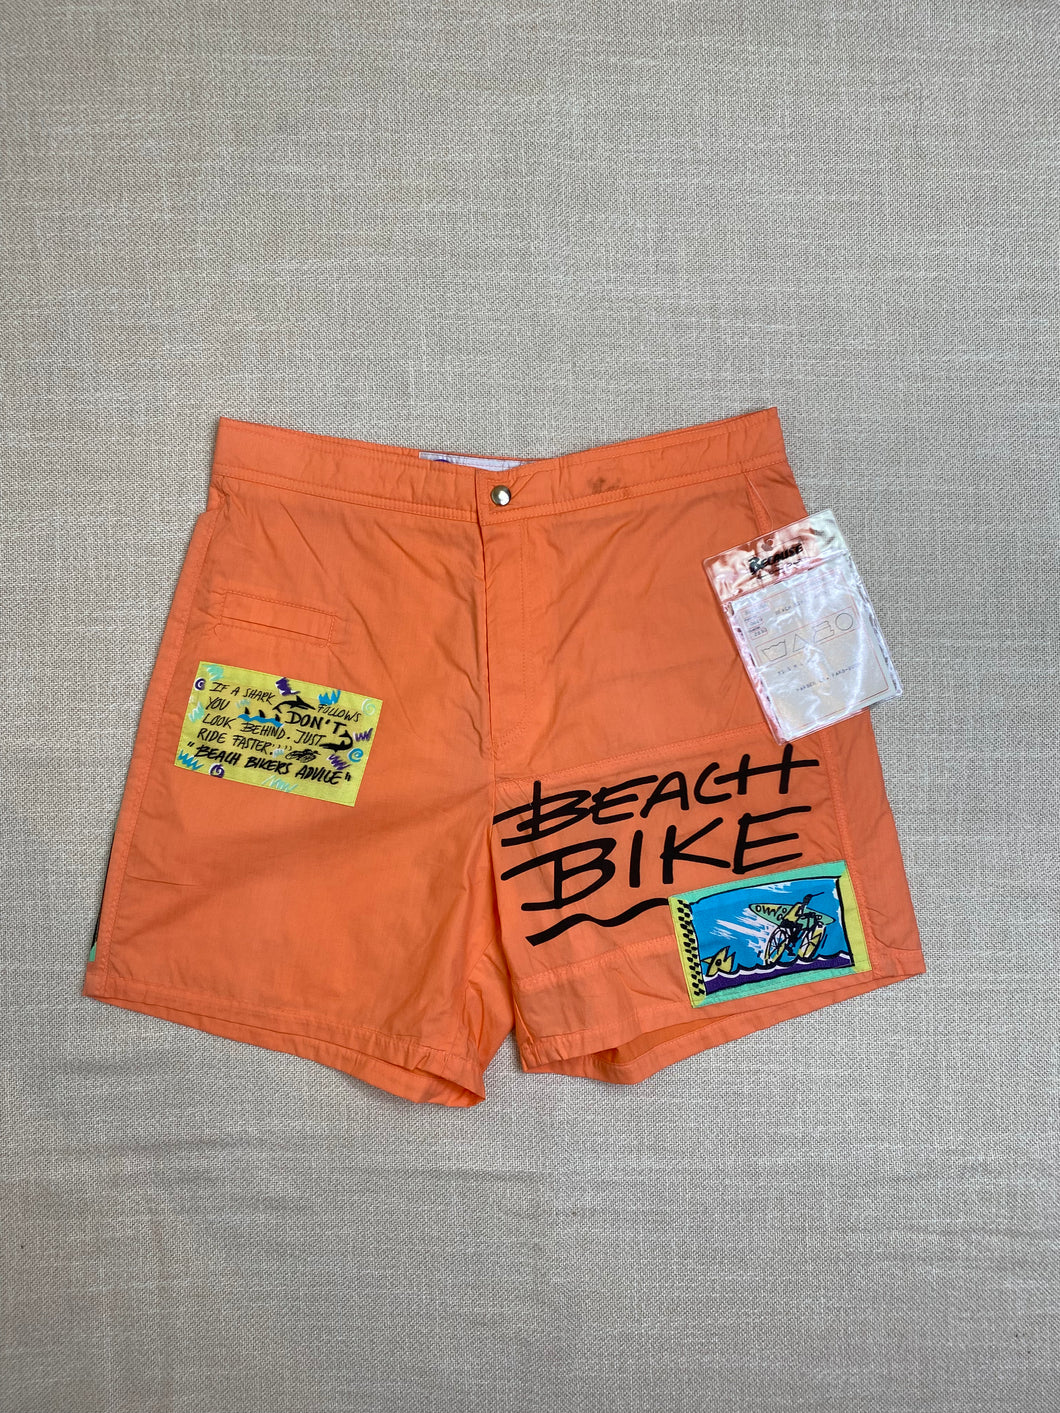 1989 because by HCC shorts orange